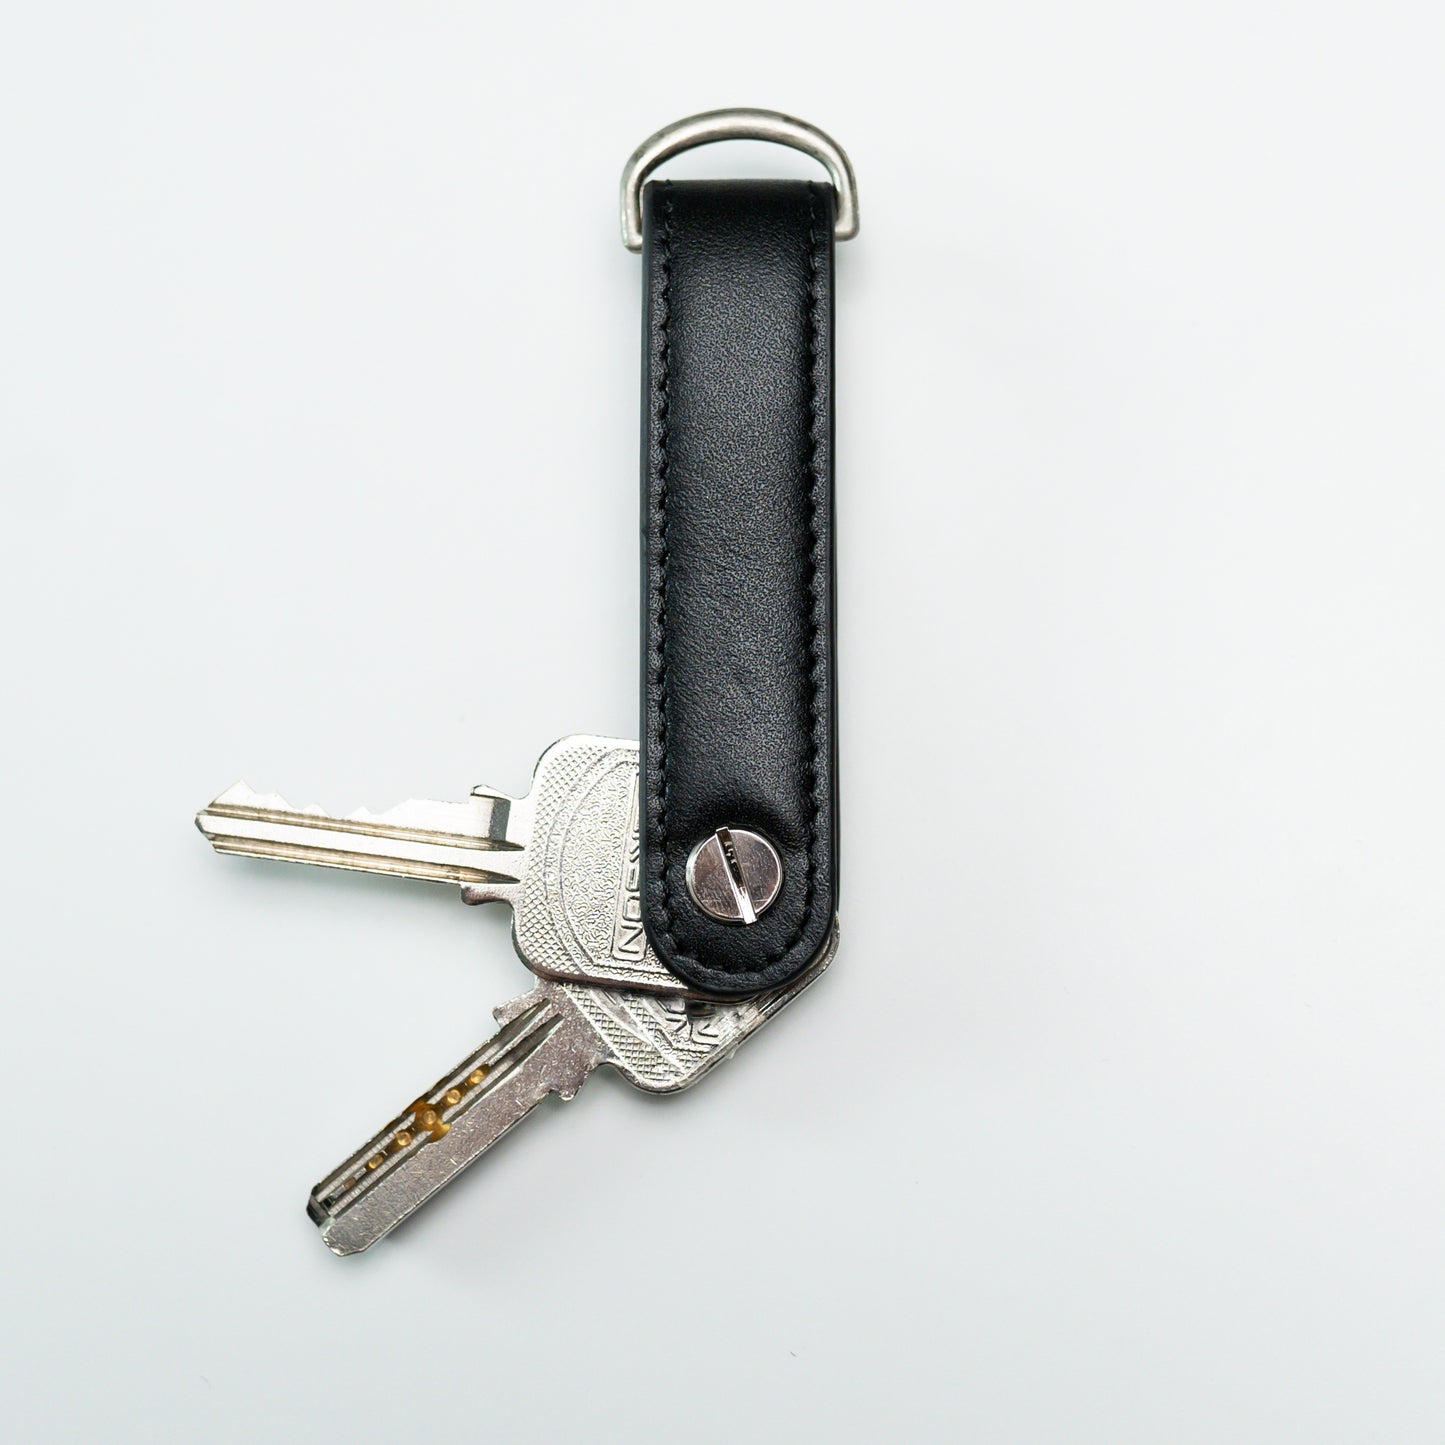 REVOLVE Leather Keyholder Key Holder Kulit by Press Play